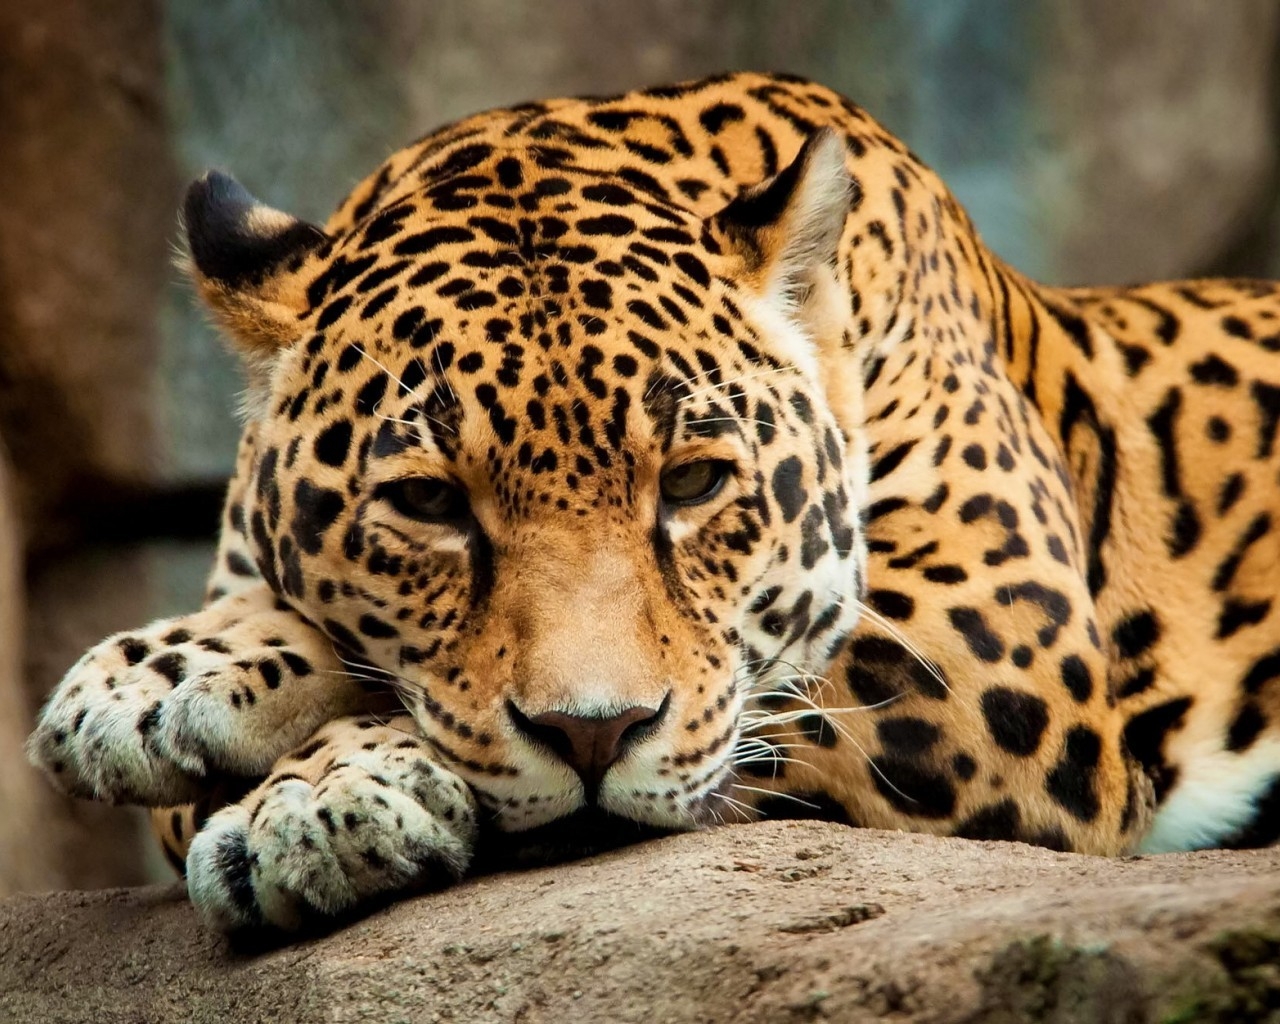 Calm Jaguar for 1280 x 1024 resolution